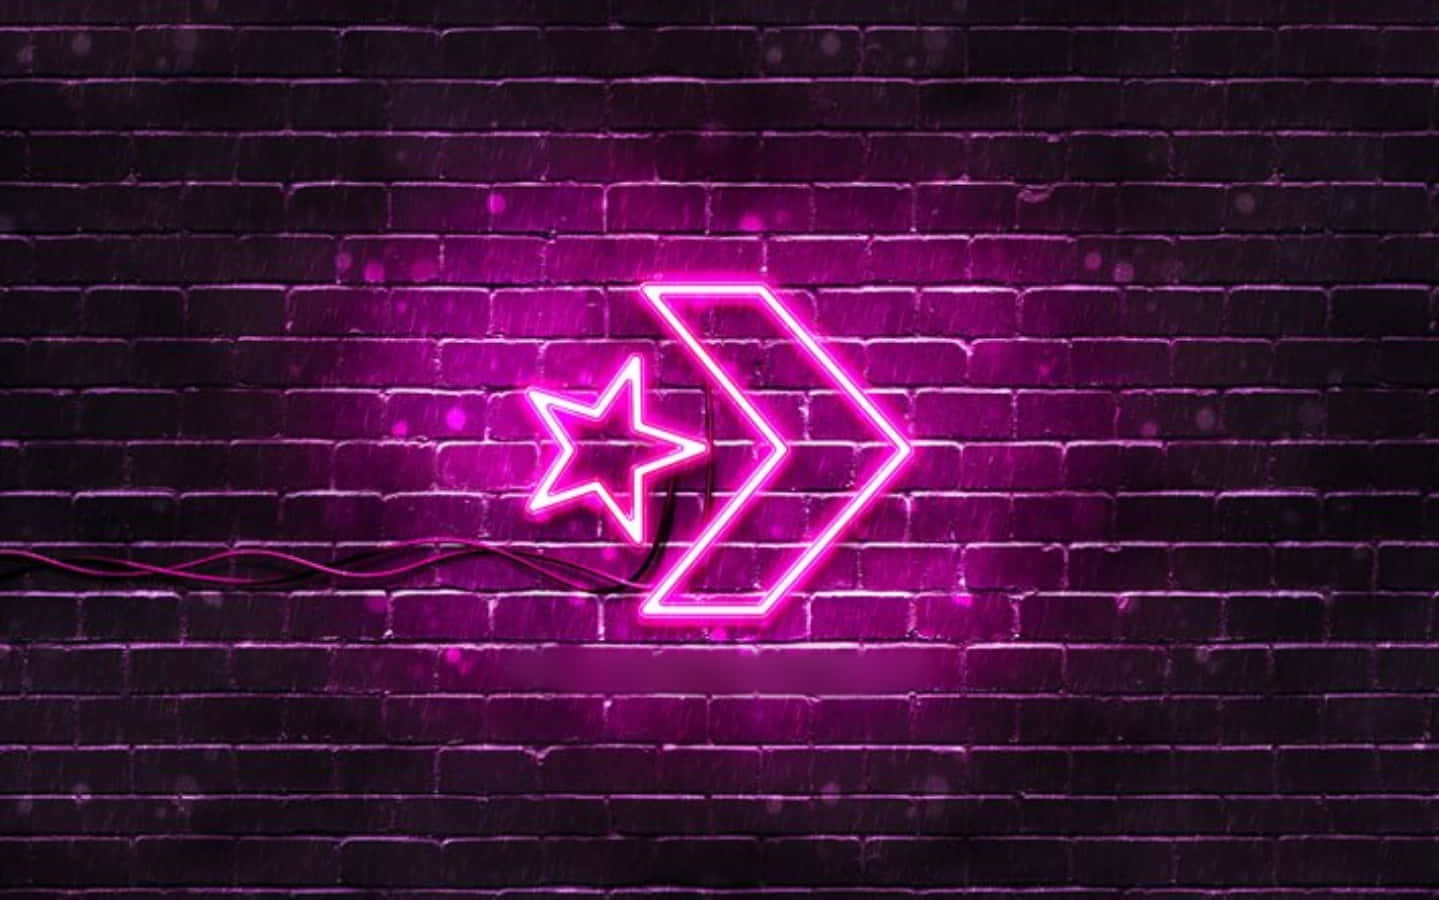 converse logo wallpaper pink